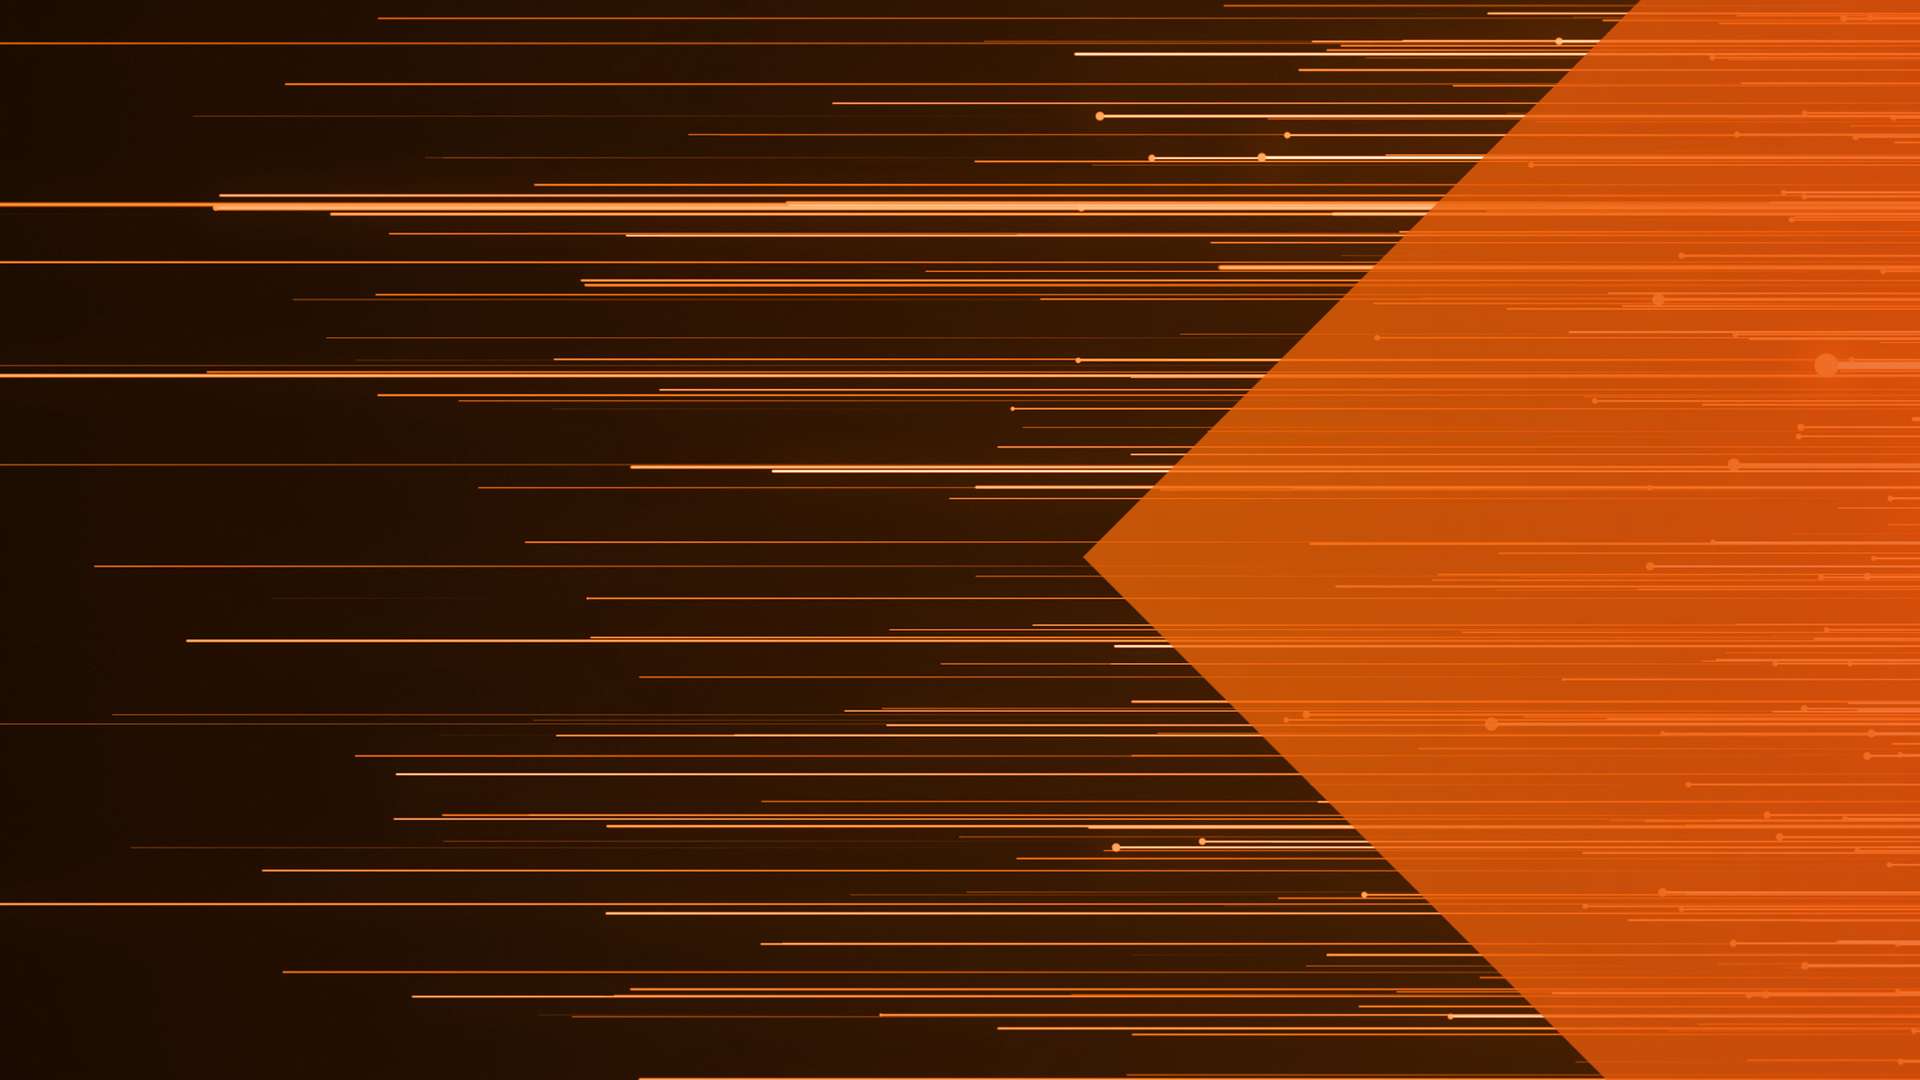 Dark background with an orange triangle and bright orange lines